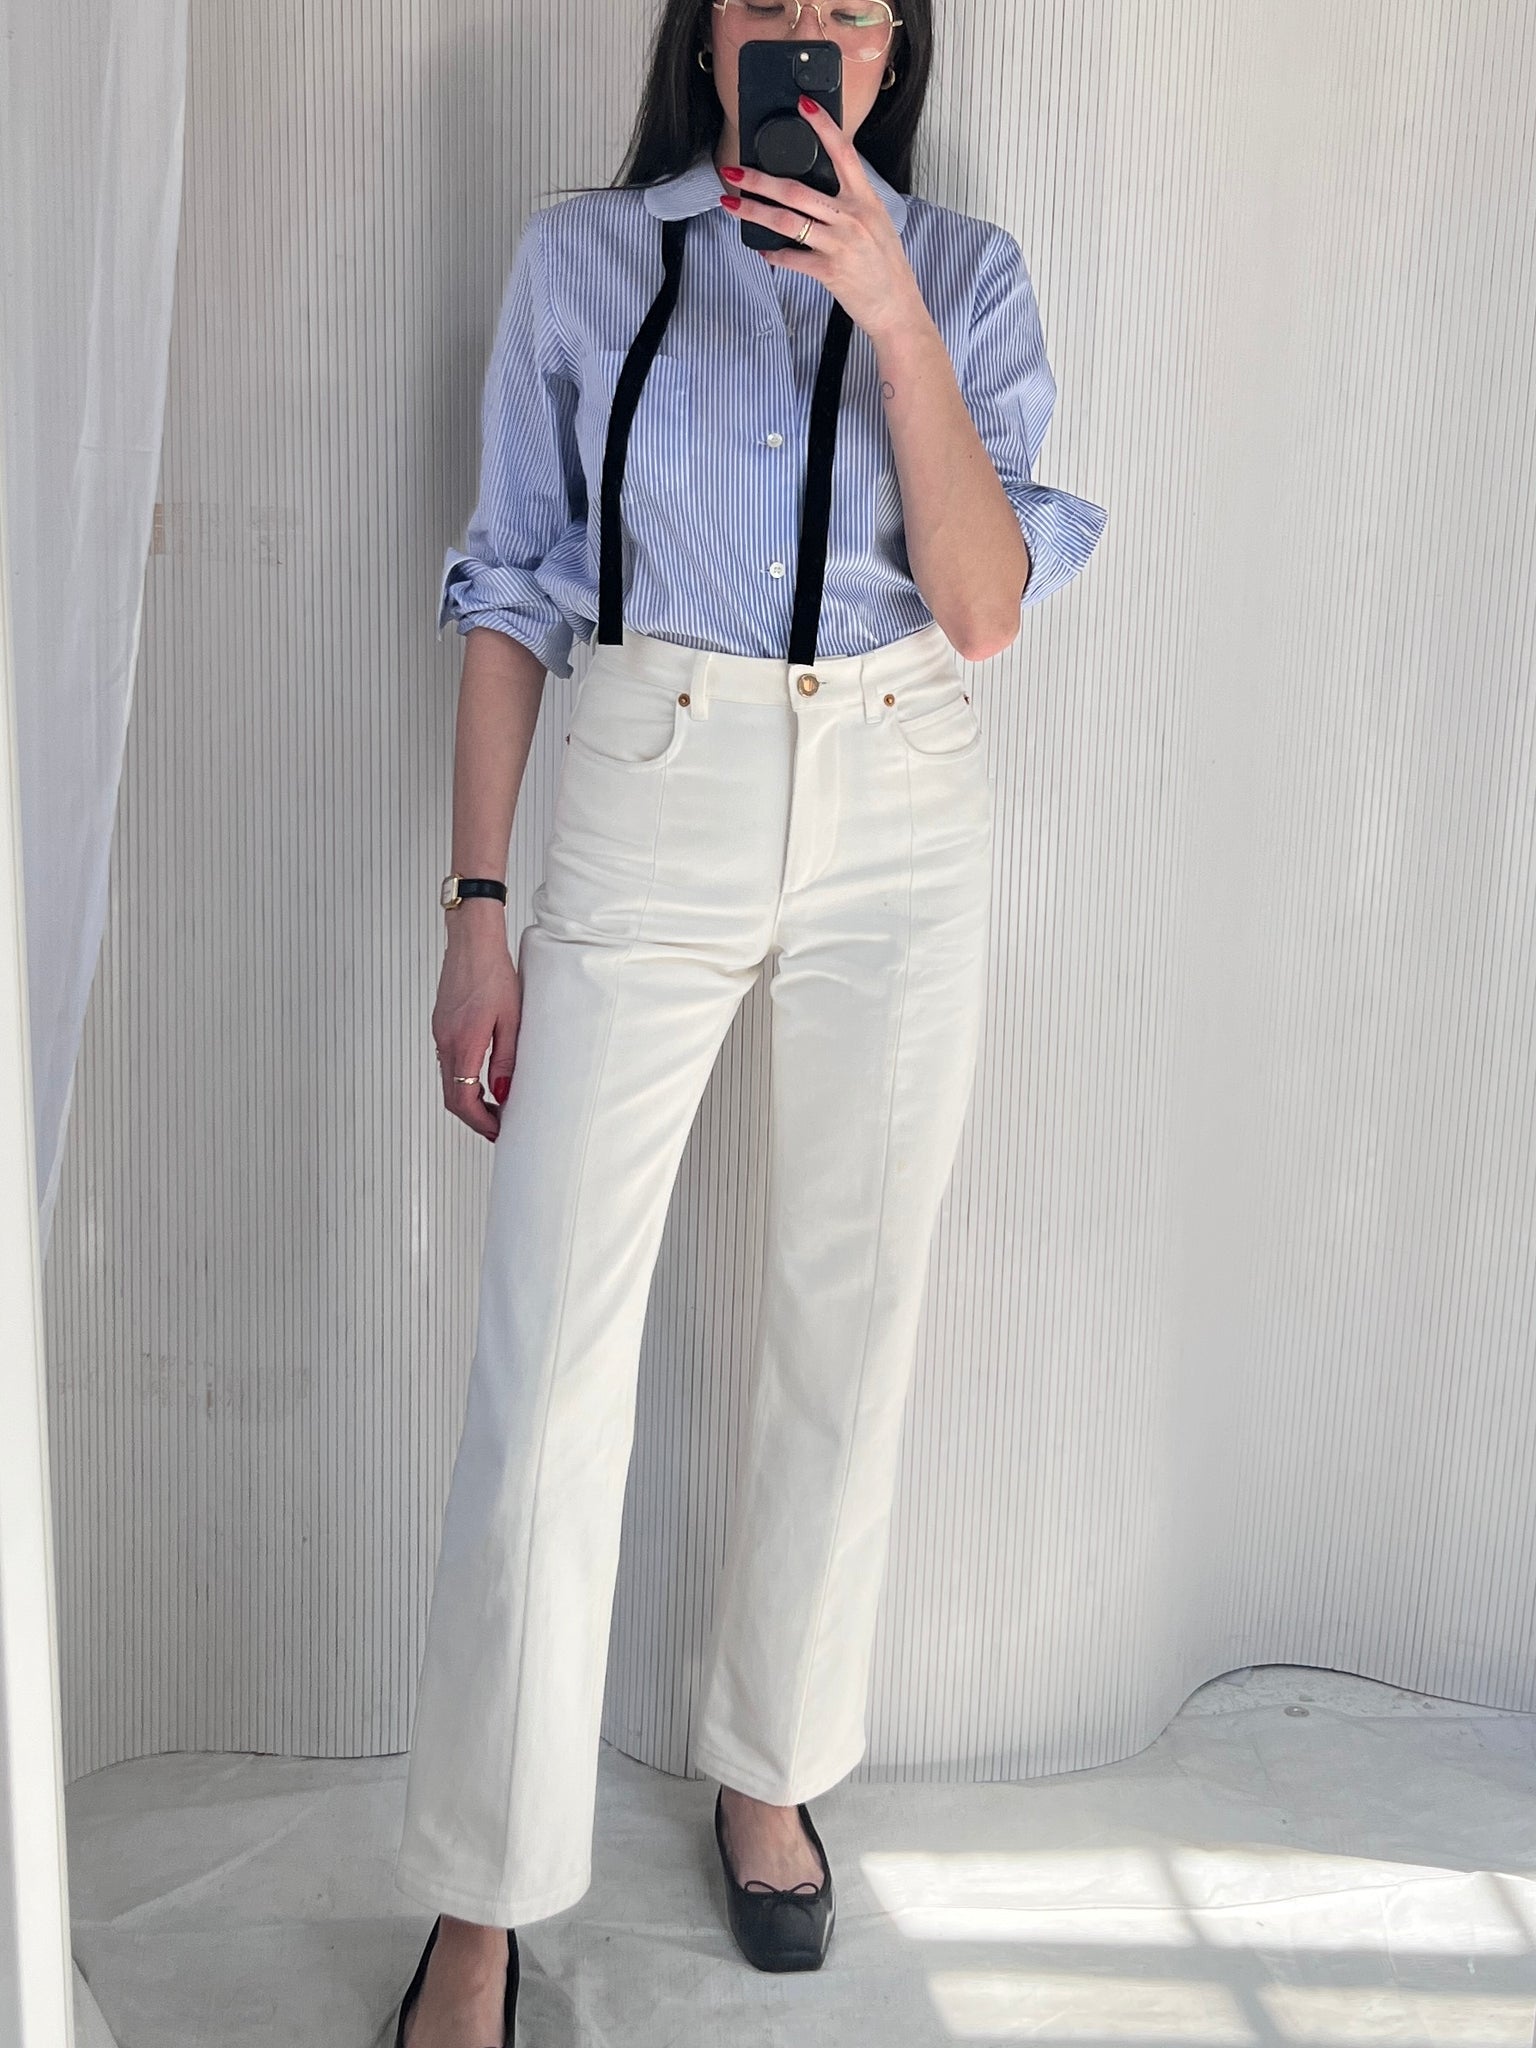 Louis Vuitton white jeans